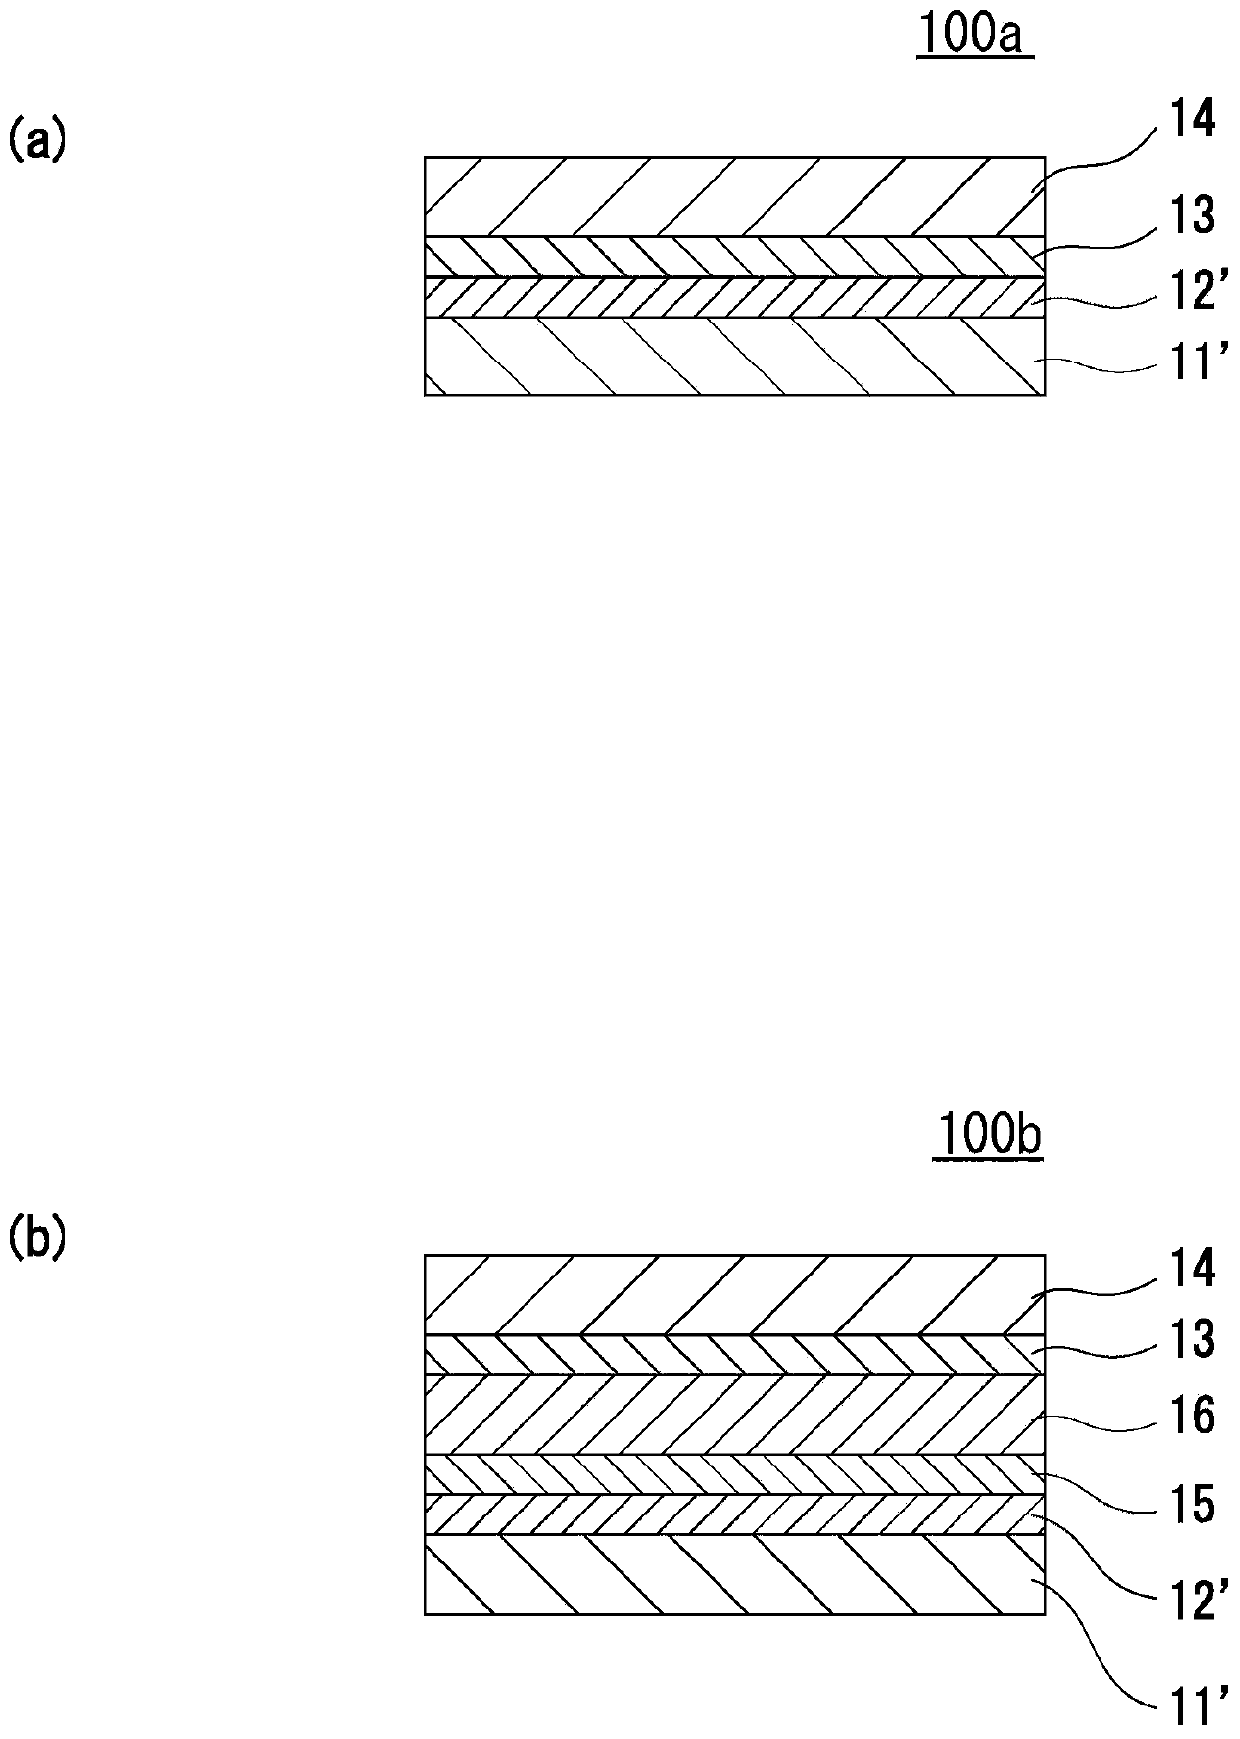 Method for producing optical laminate